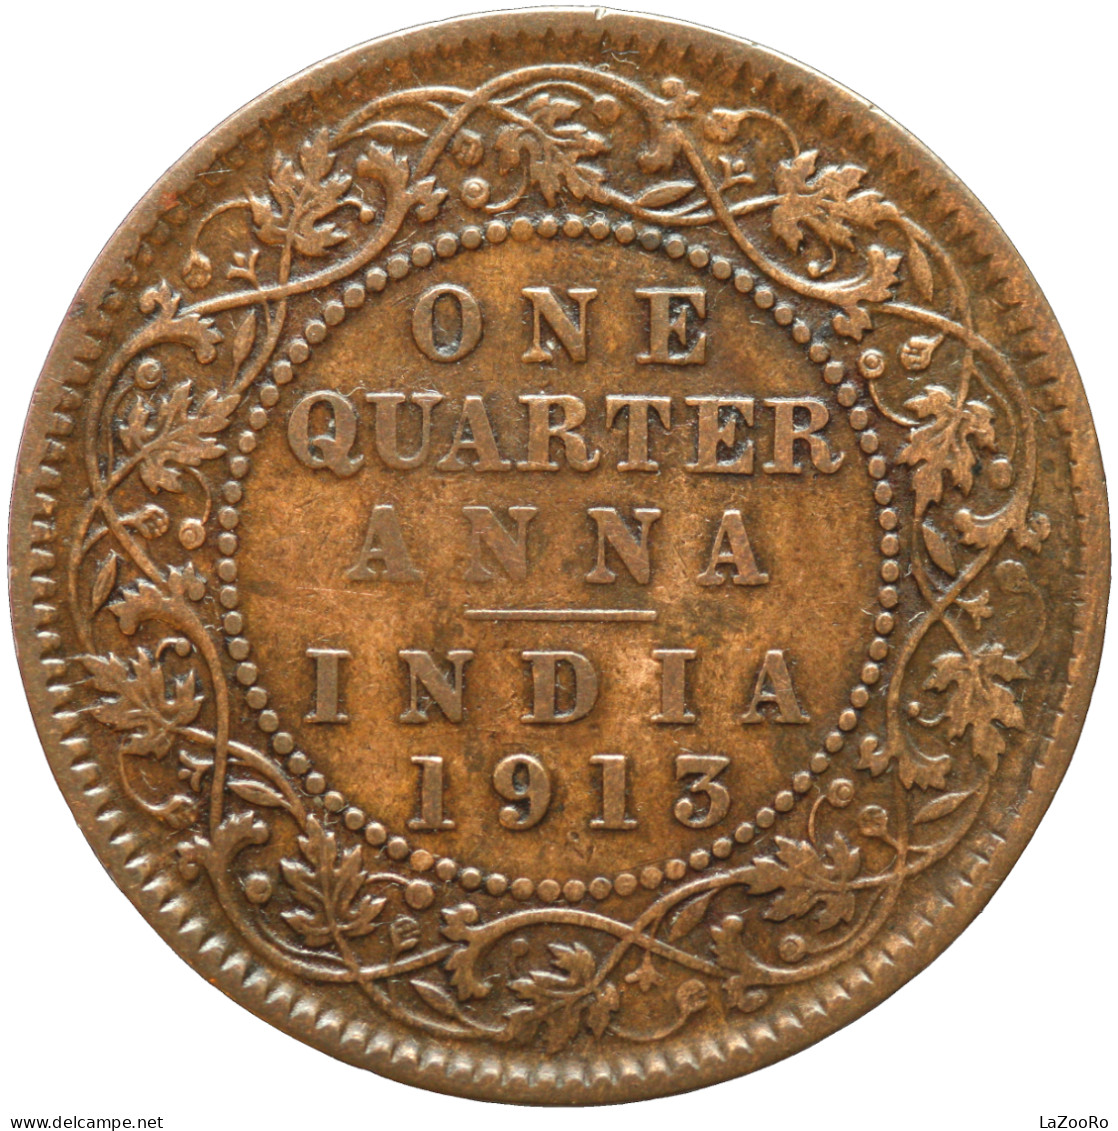 LaZooRo: British India 1/4 Anna 1913 VF - Kolonies